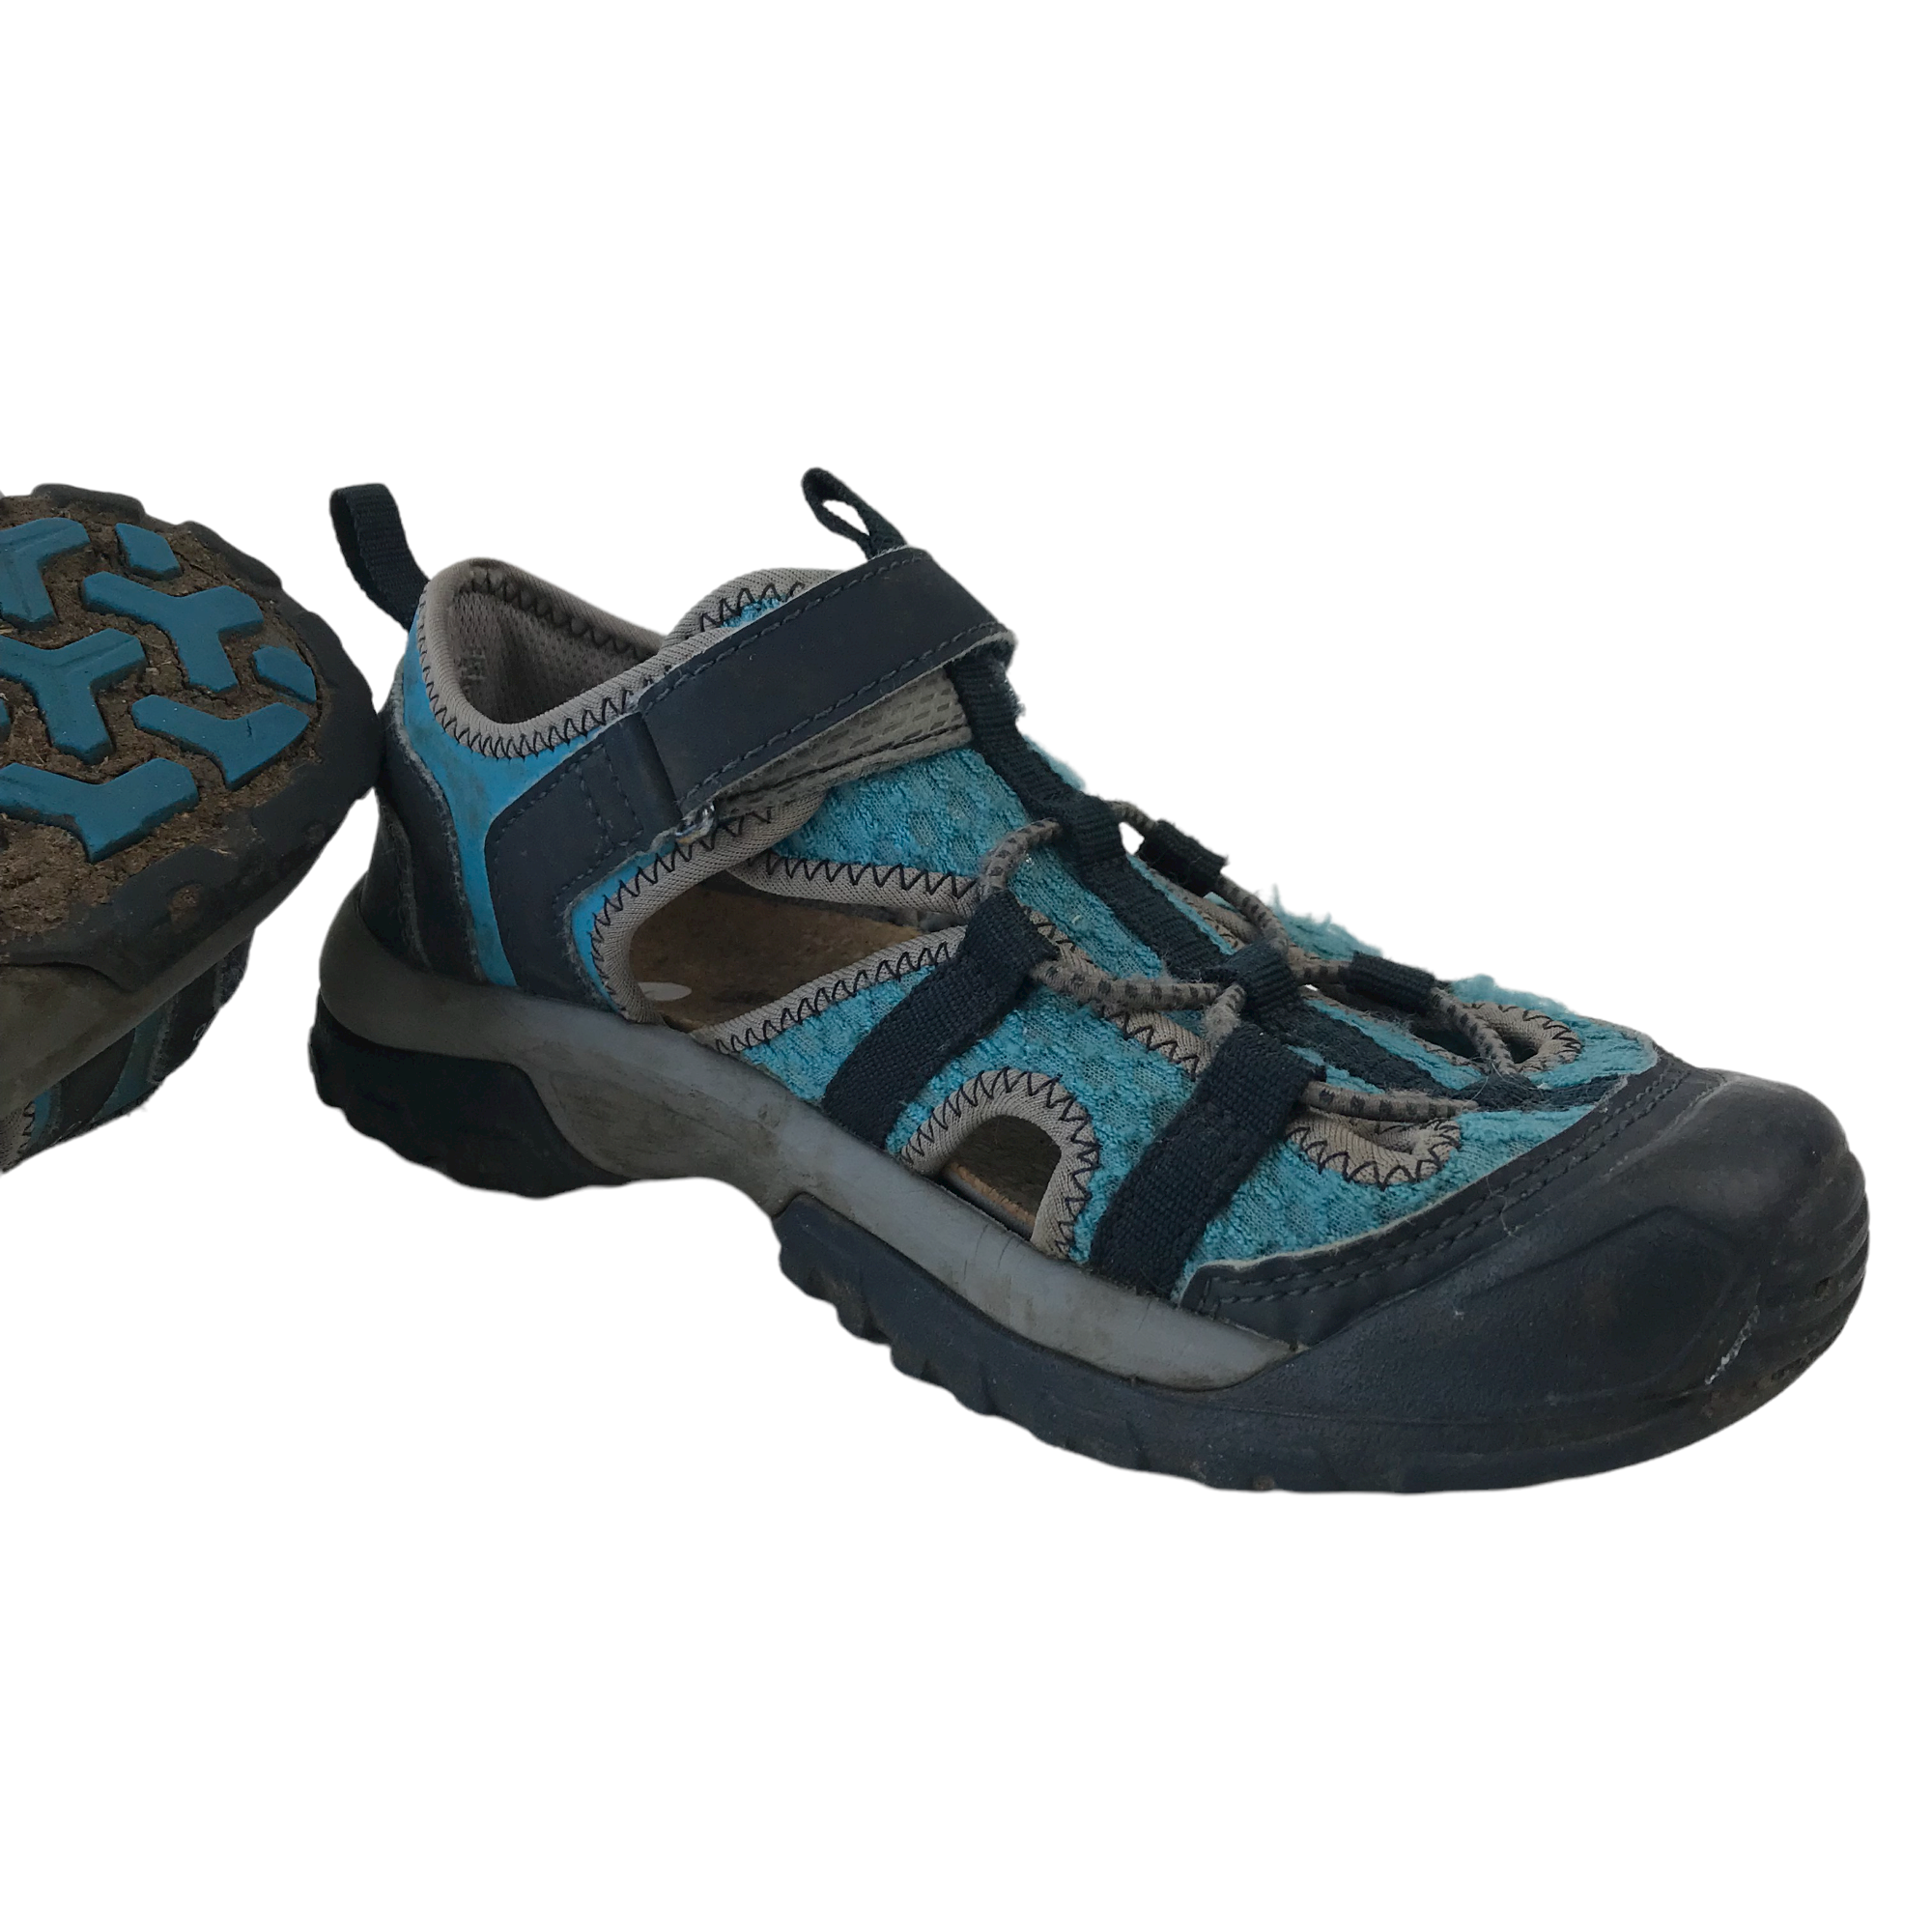 Men's Hiking Sandals - NH 120 Black - Black, Carbon grey - Quechua -  Decathlon